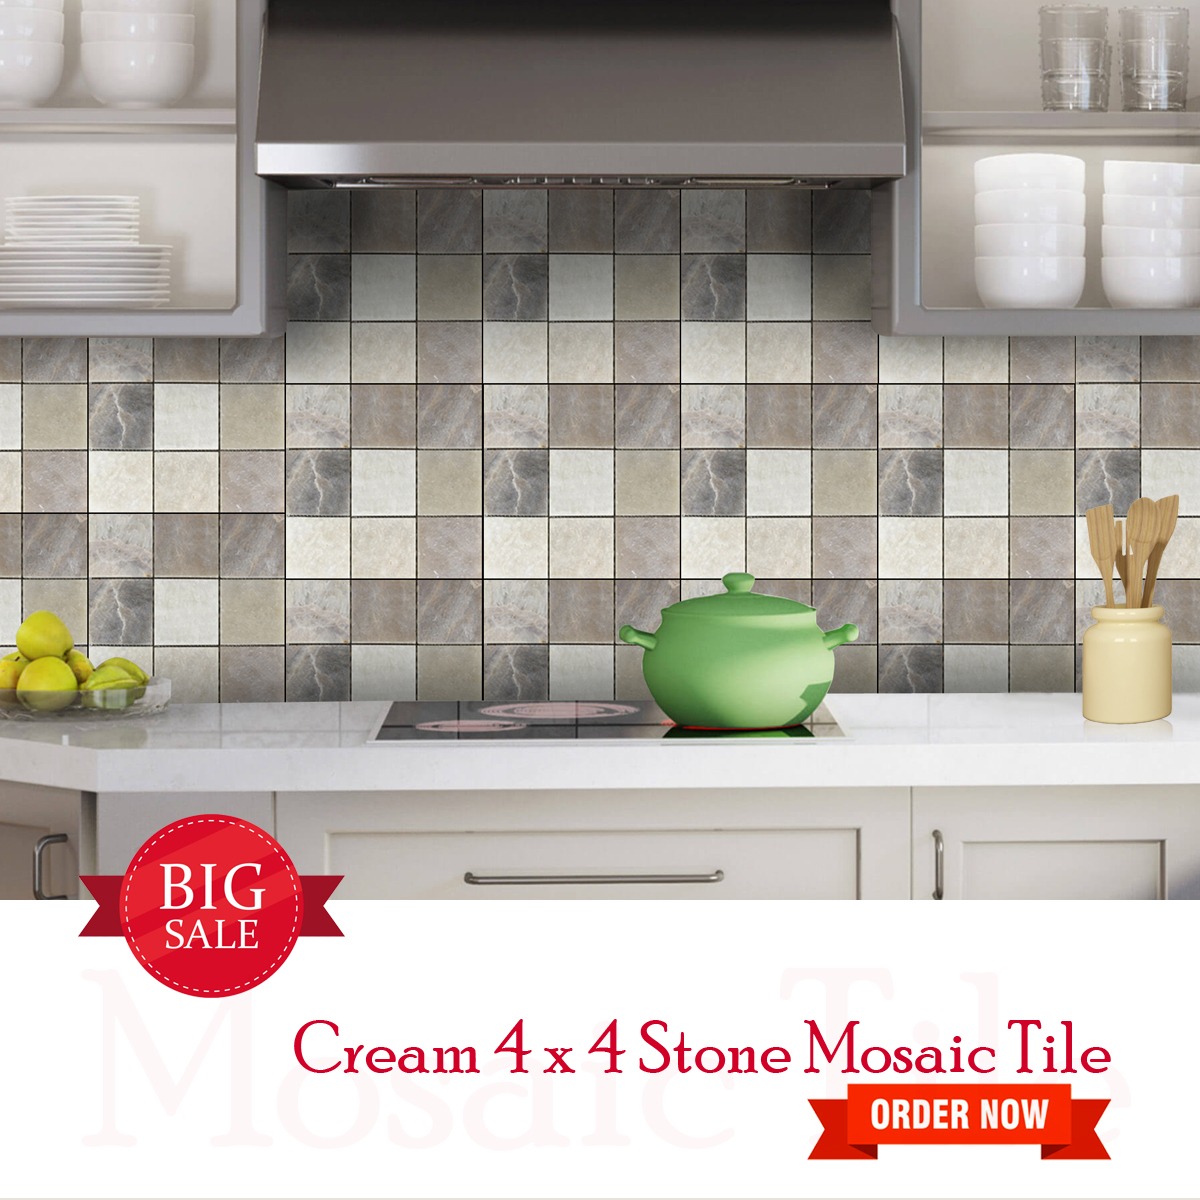 Cream 4 x 4 Stone Mosaic Tile